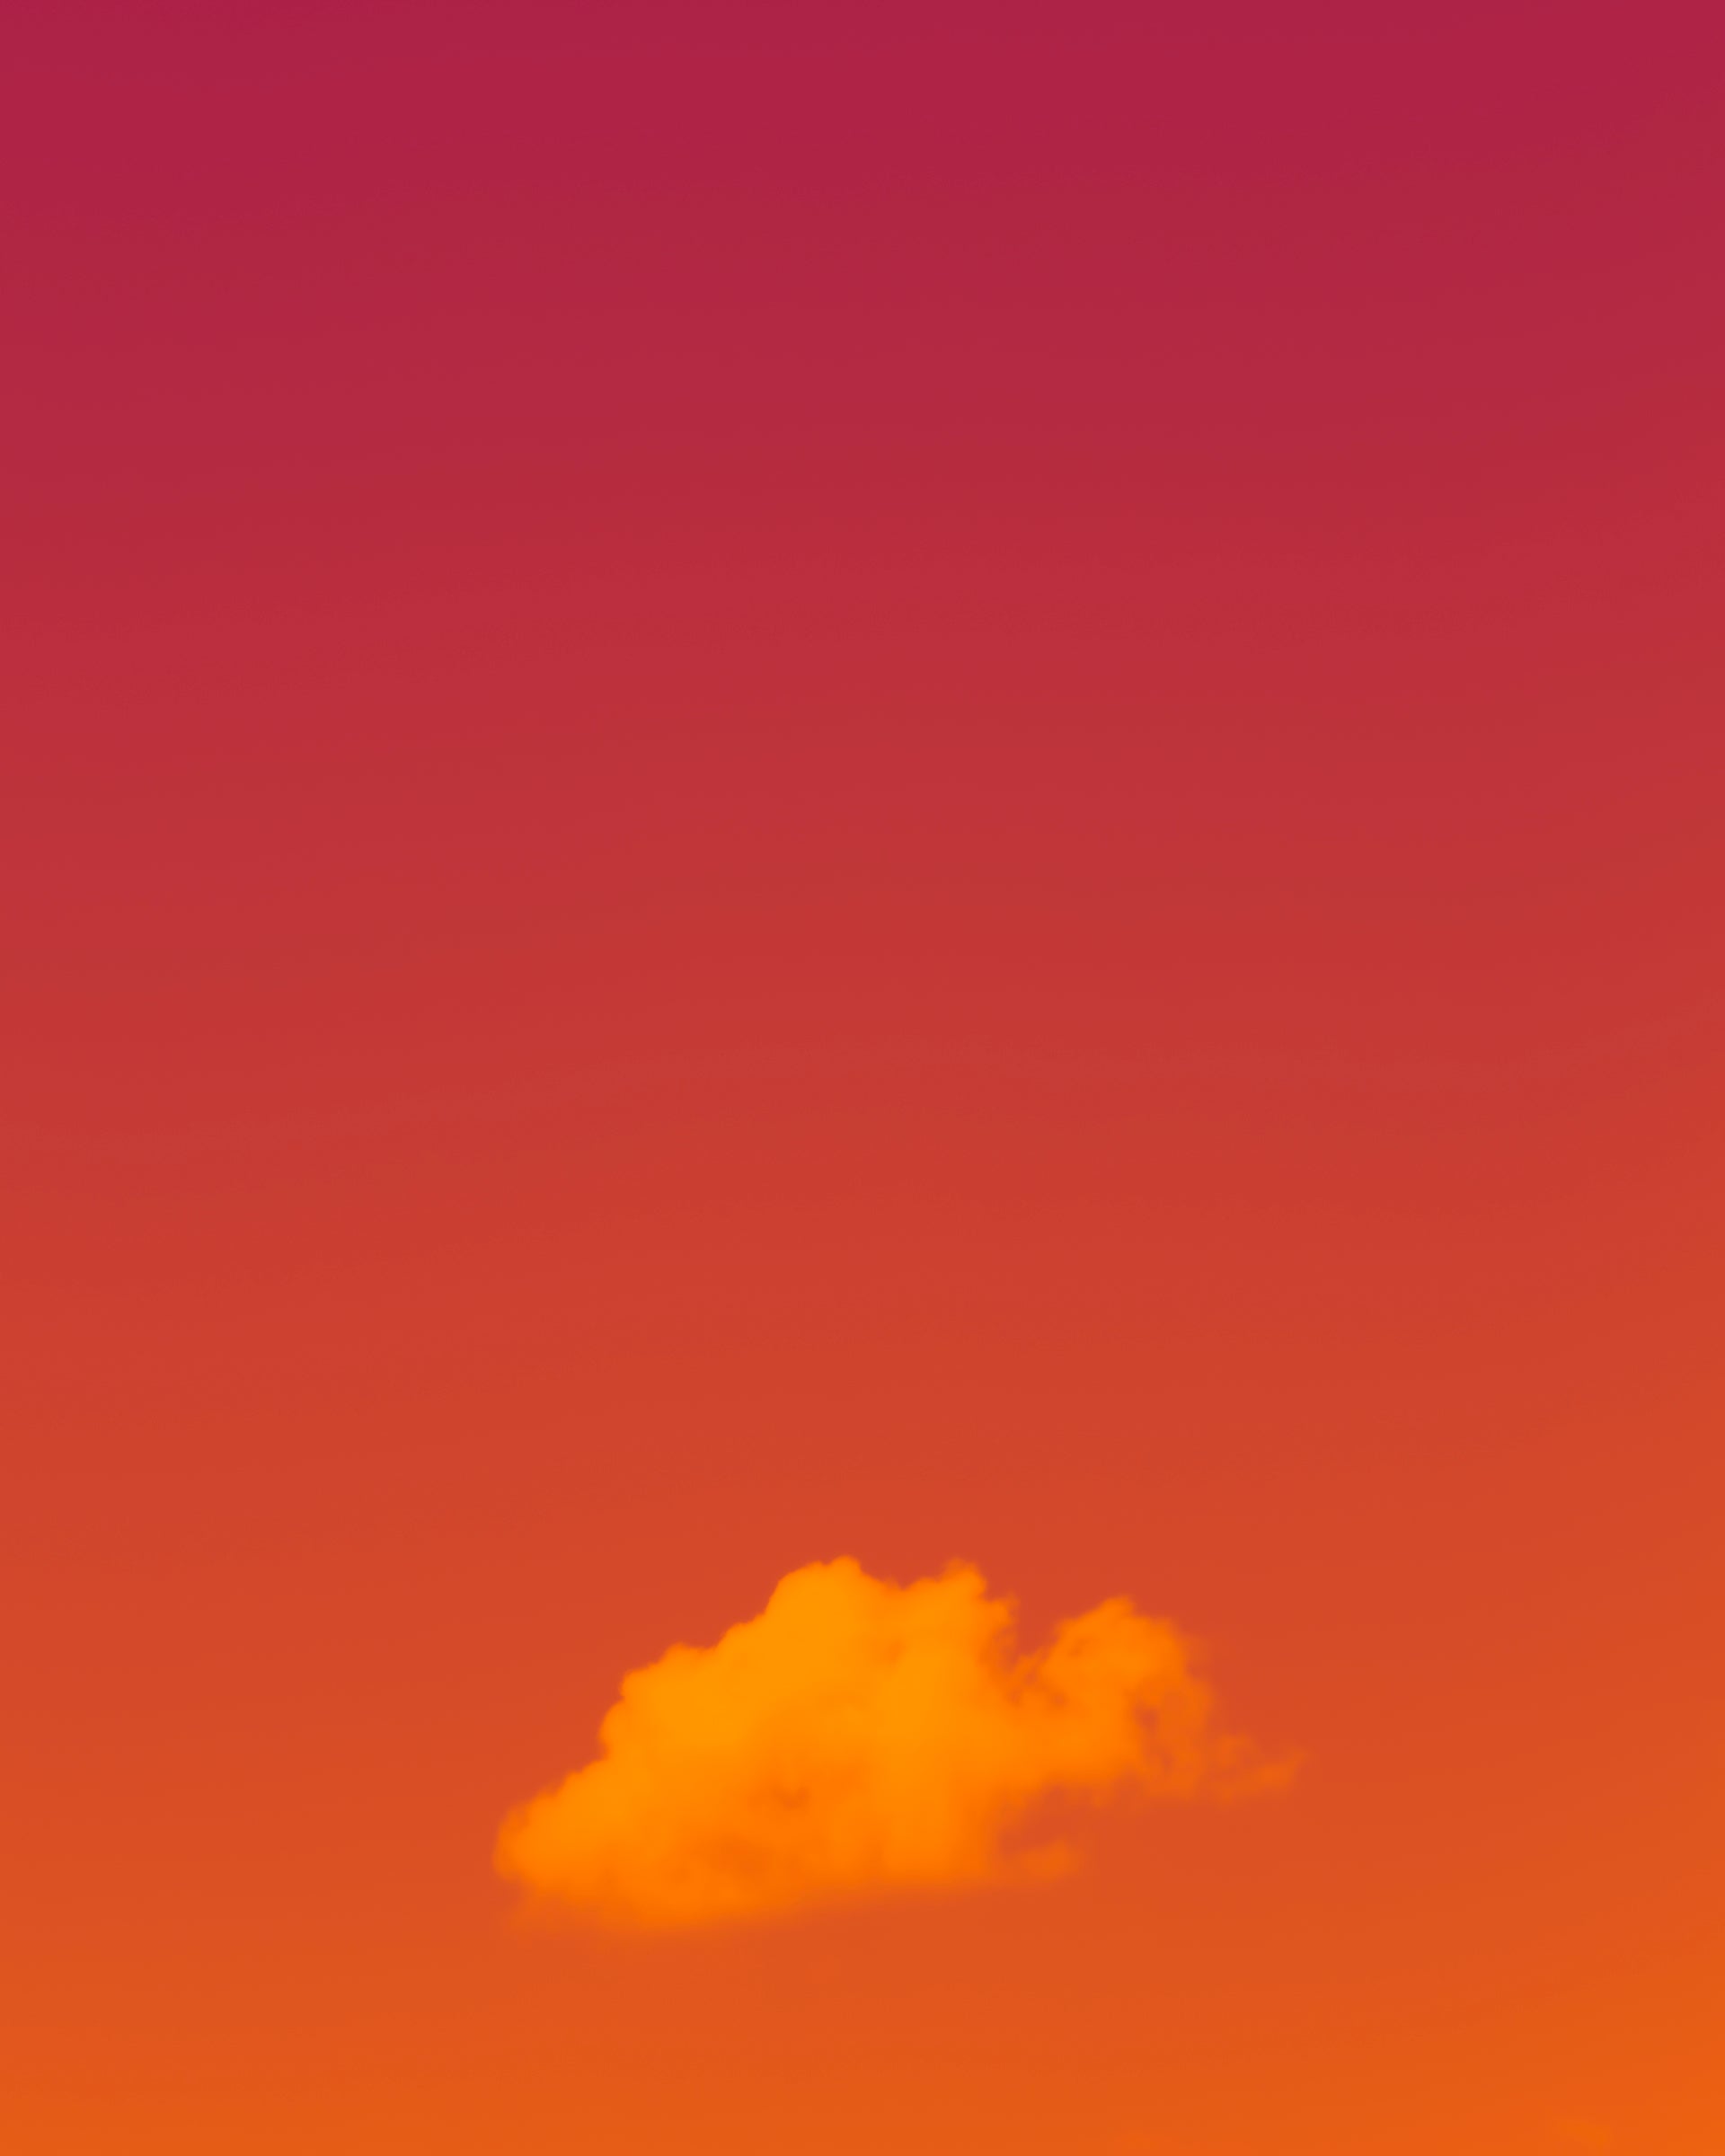 photo of single cloud, orange and magenta background